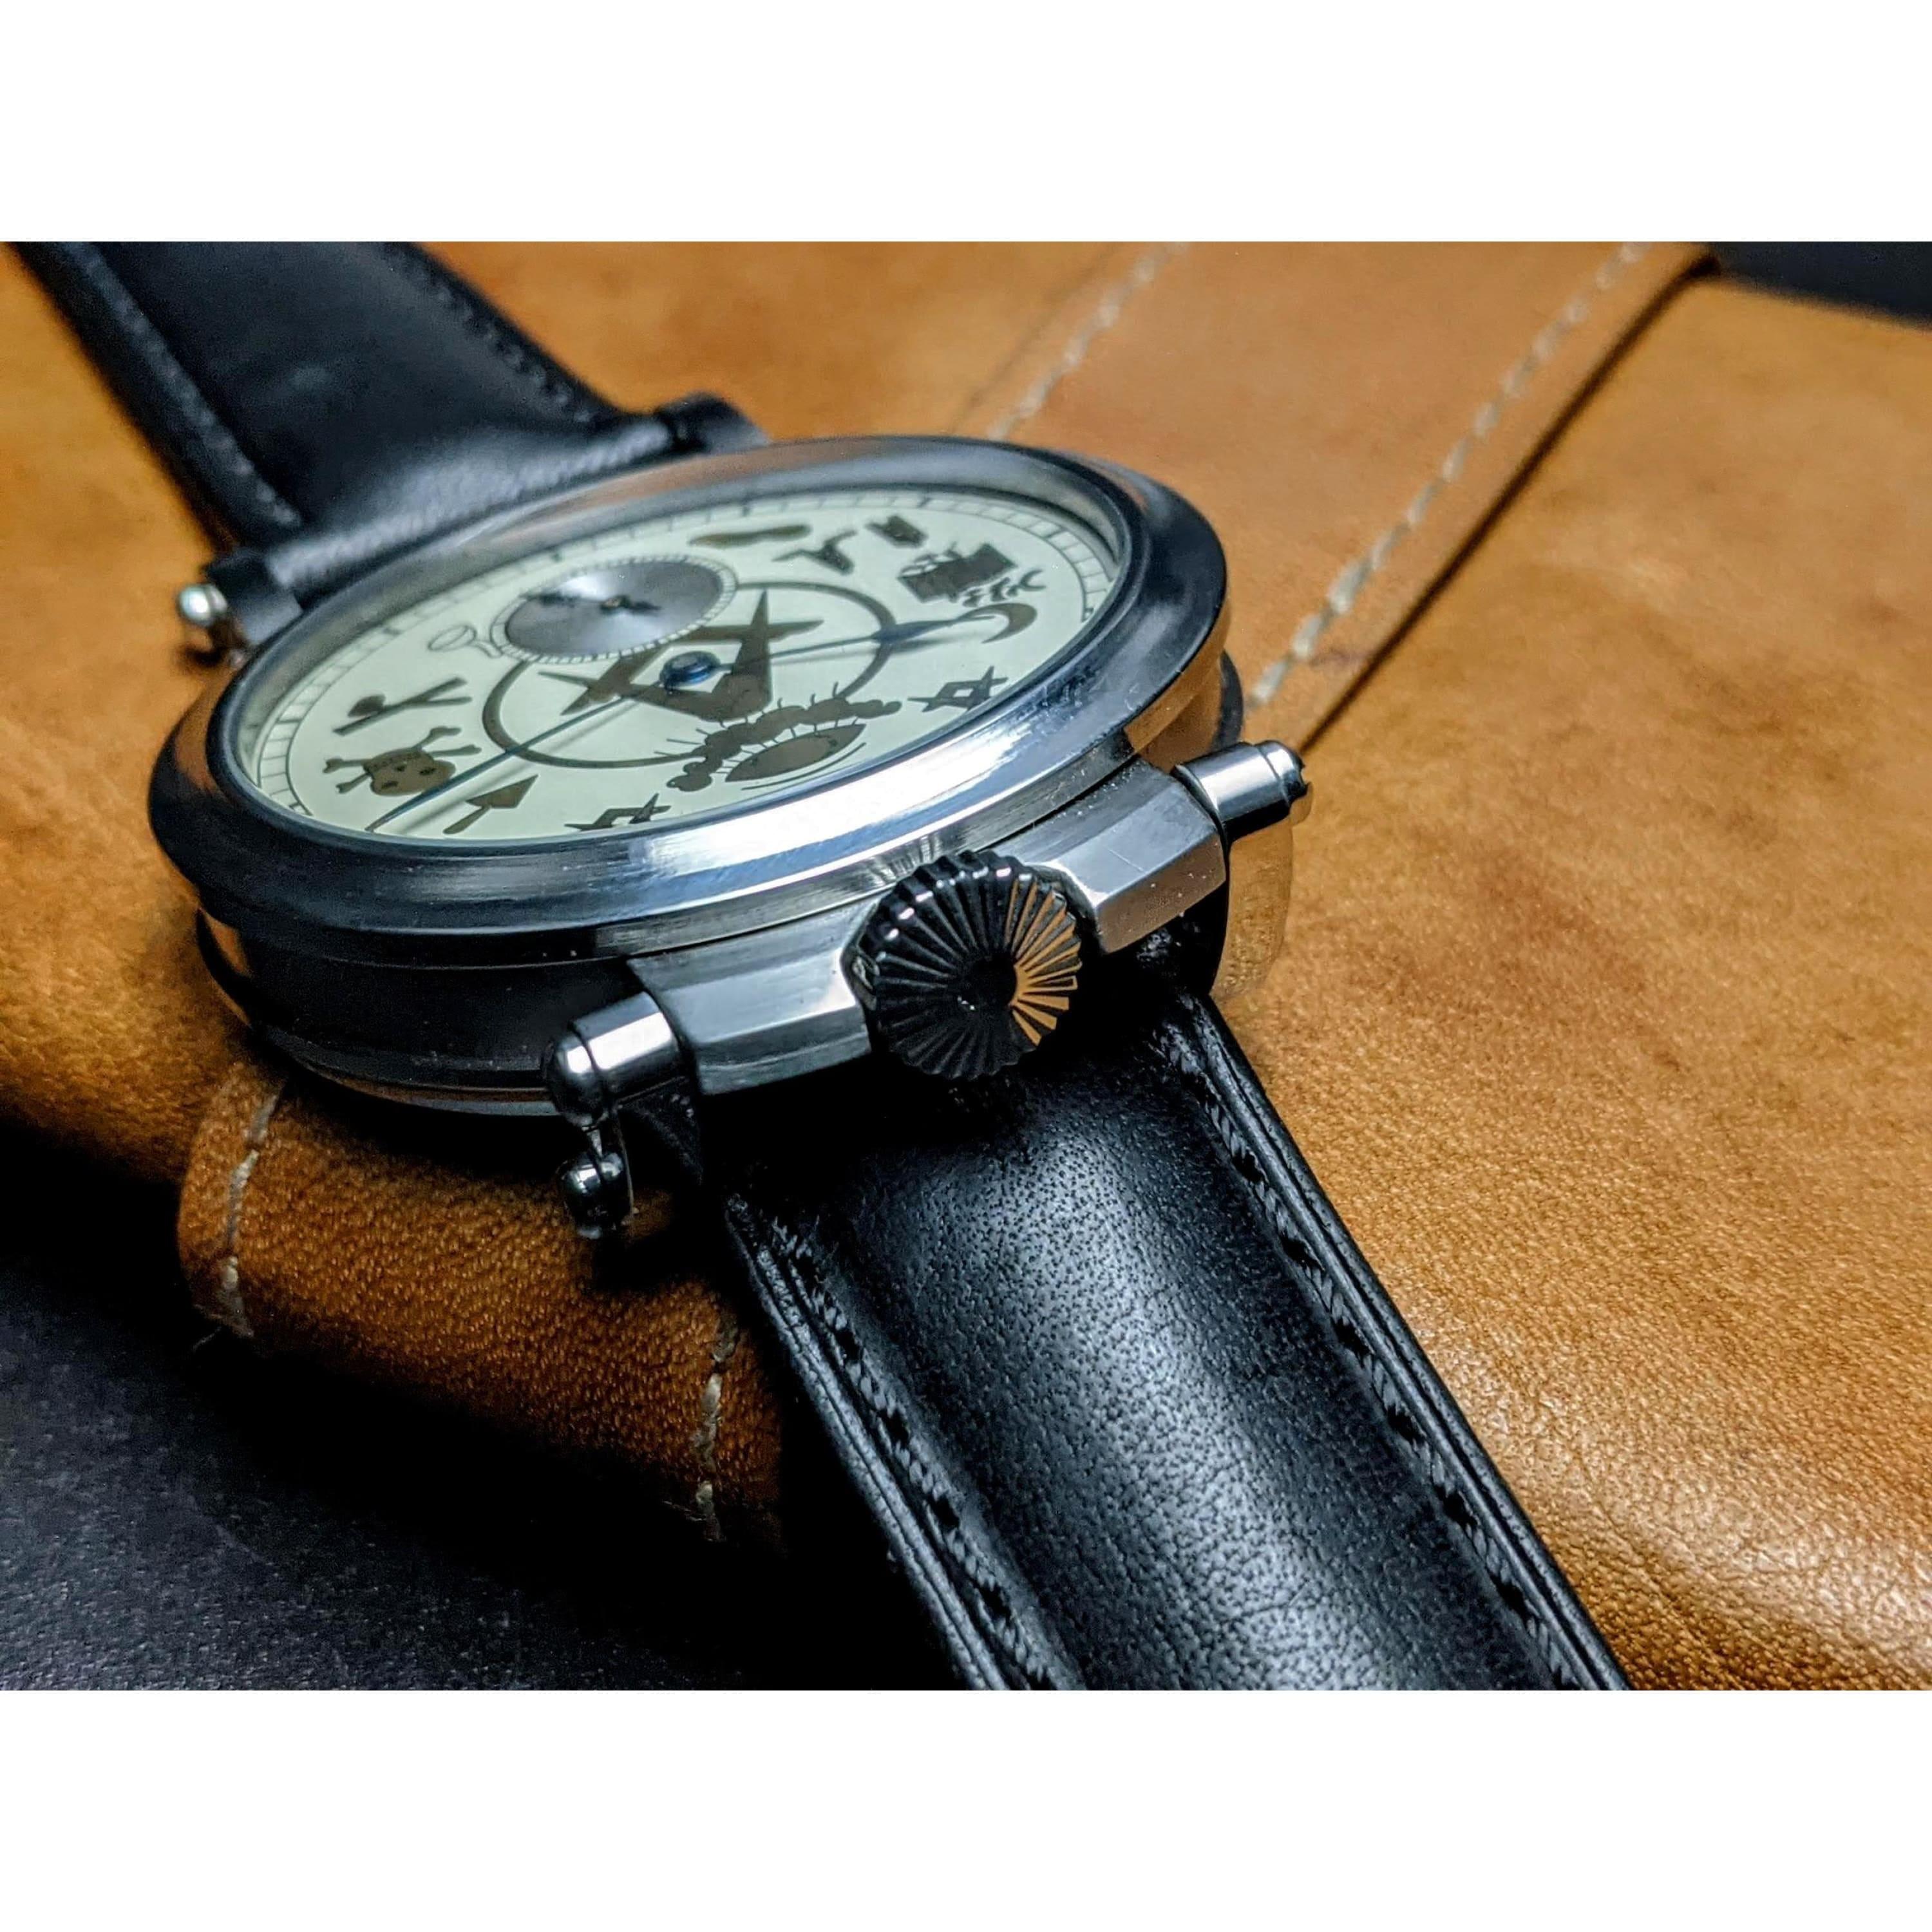 Artisan Watches | Specialty Watches | Buy Men's Luxury Watches Online -  Vortic Watch Co.